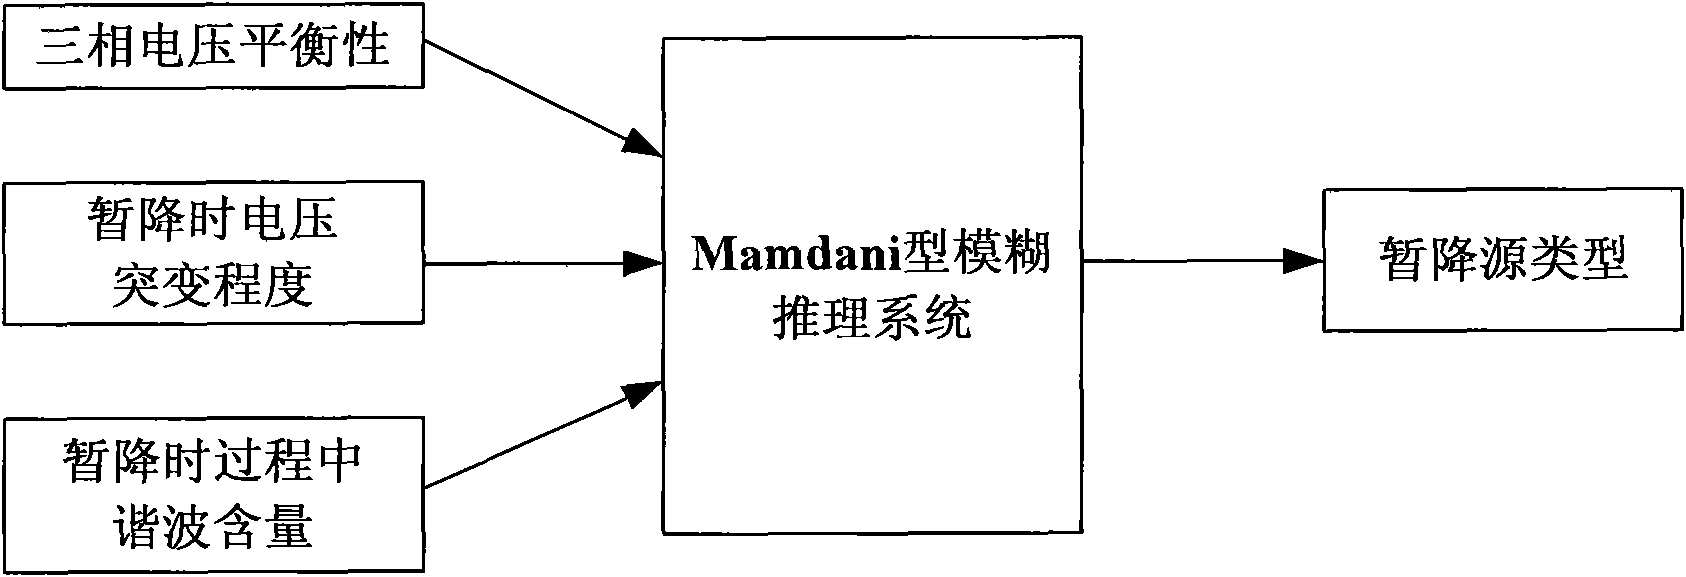 Voltage sag source identification method based on Mamdani fuzzy reasoning